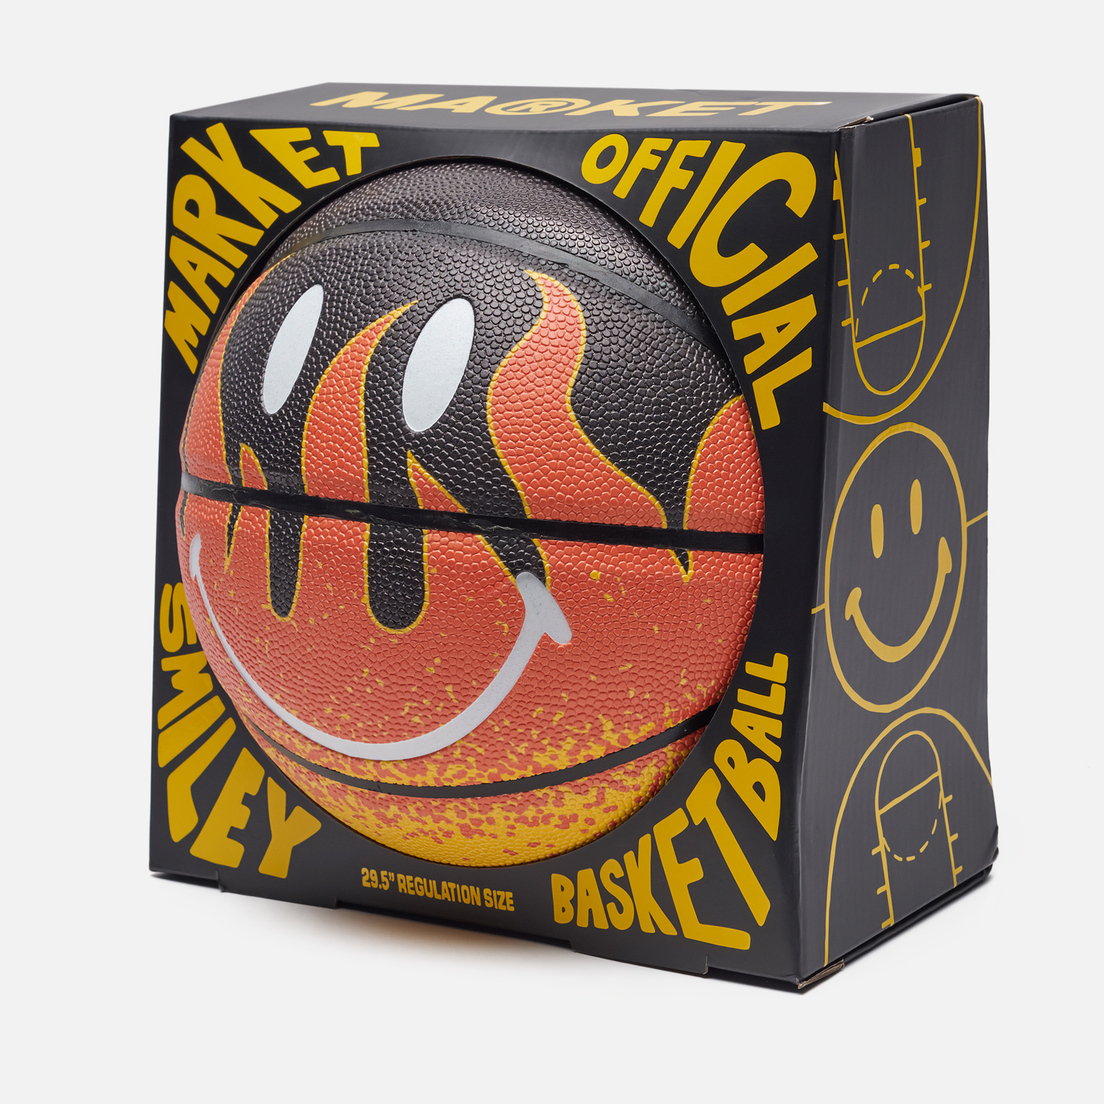 MARKET Баскетбольный мяч Smiley Market Flame